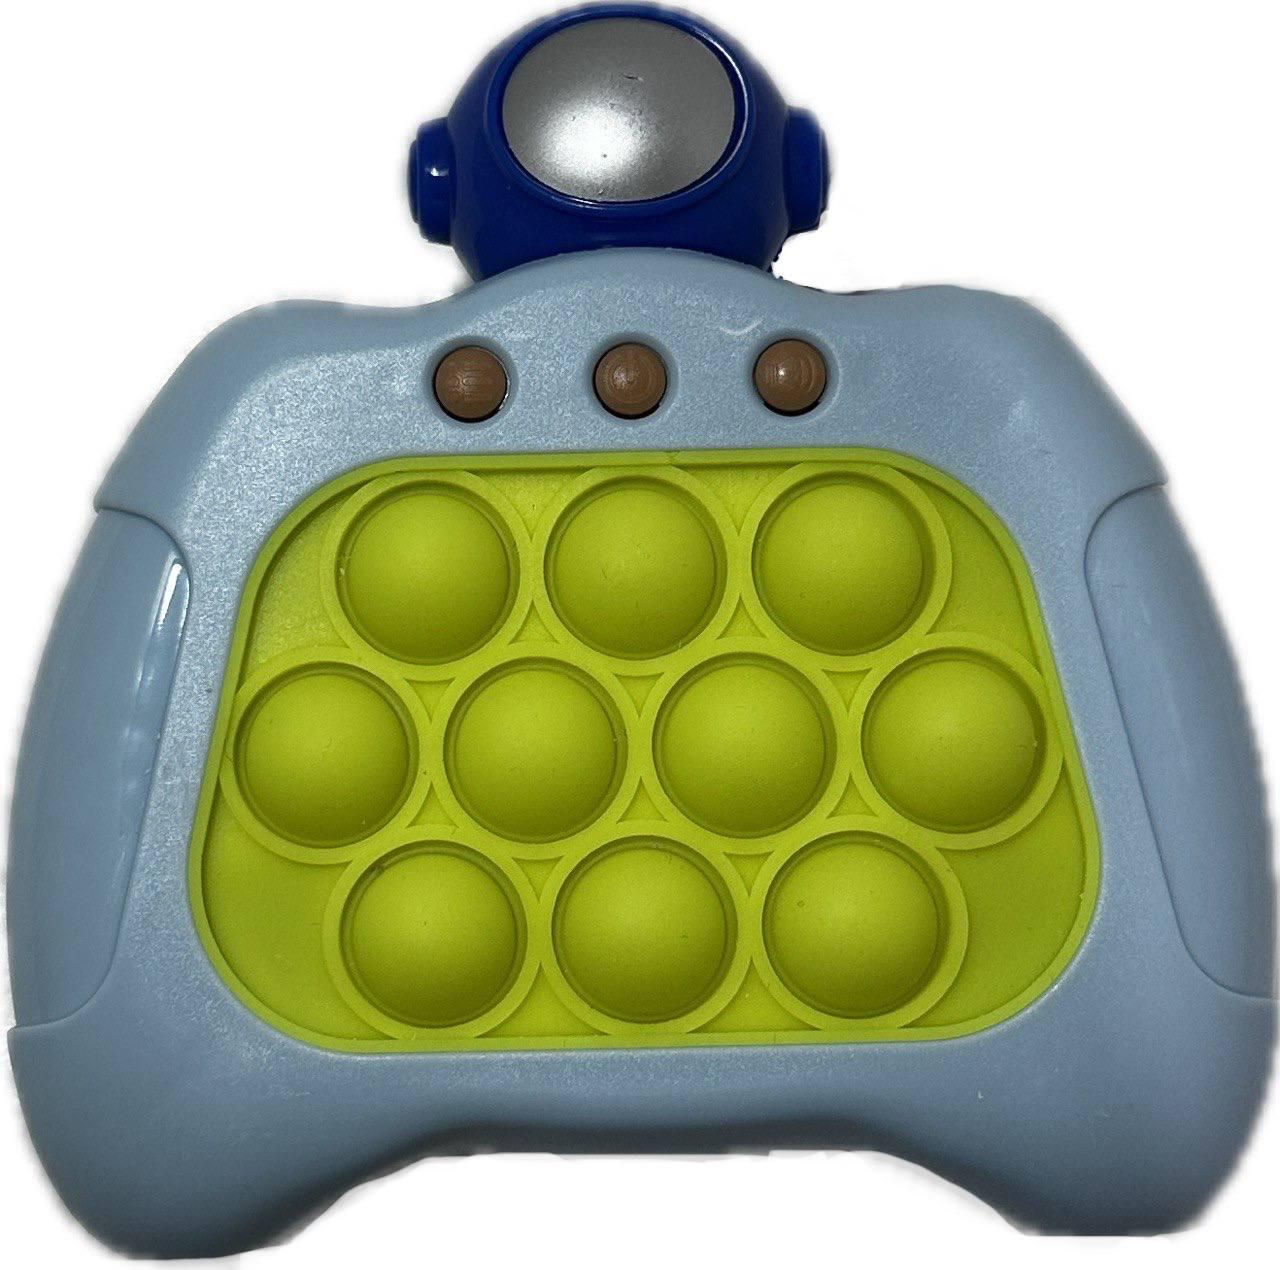 Іграшка електронна 696 Toys Quick Push Pop It 4 режими гри Блакитний (QPPI5)